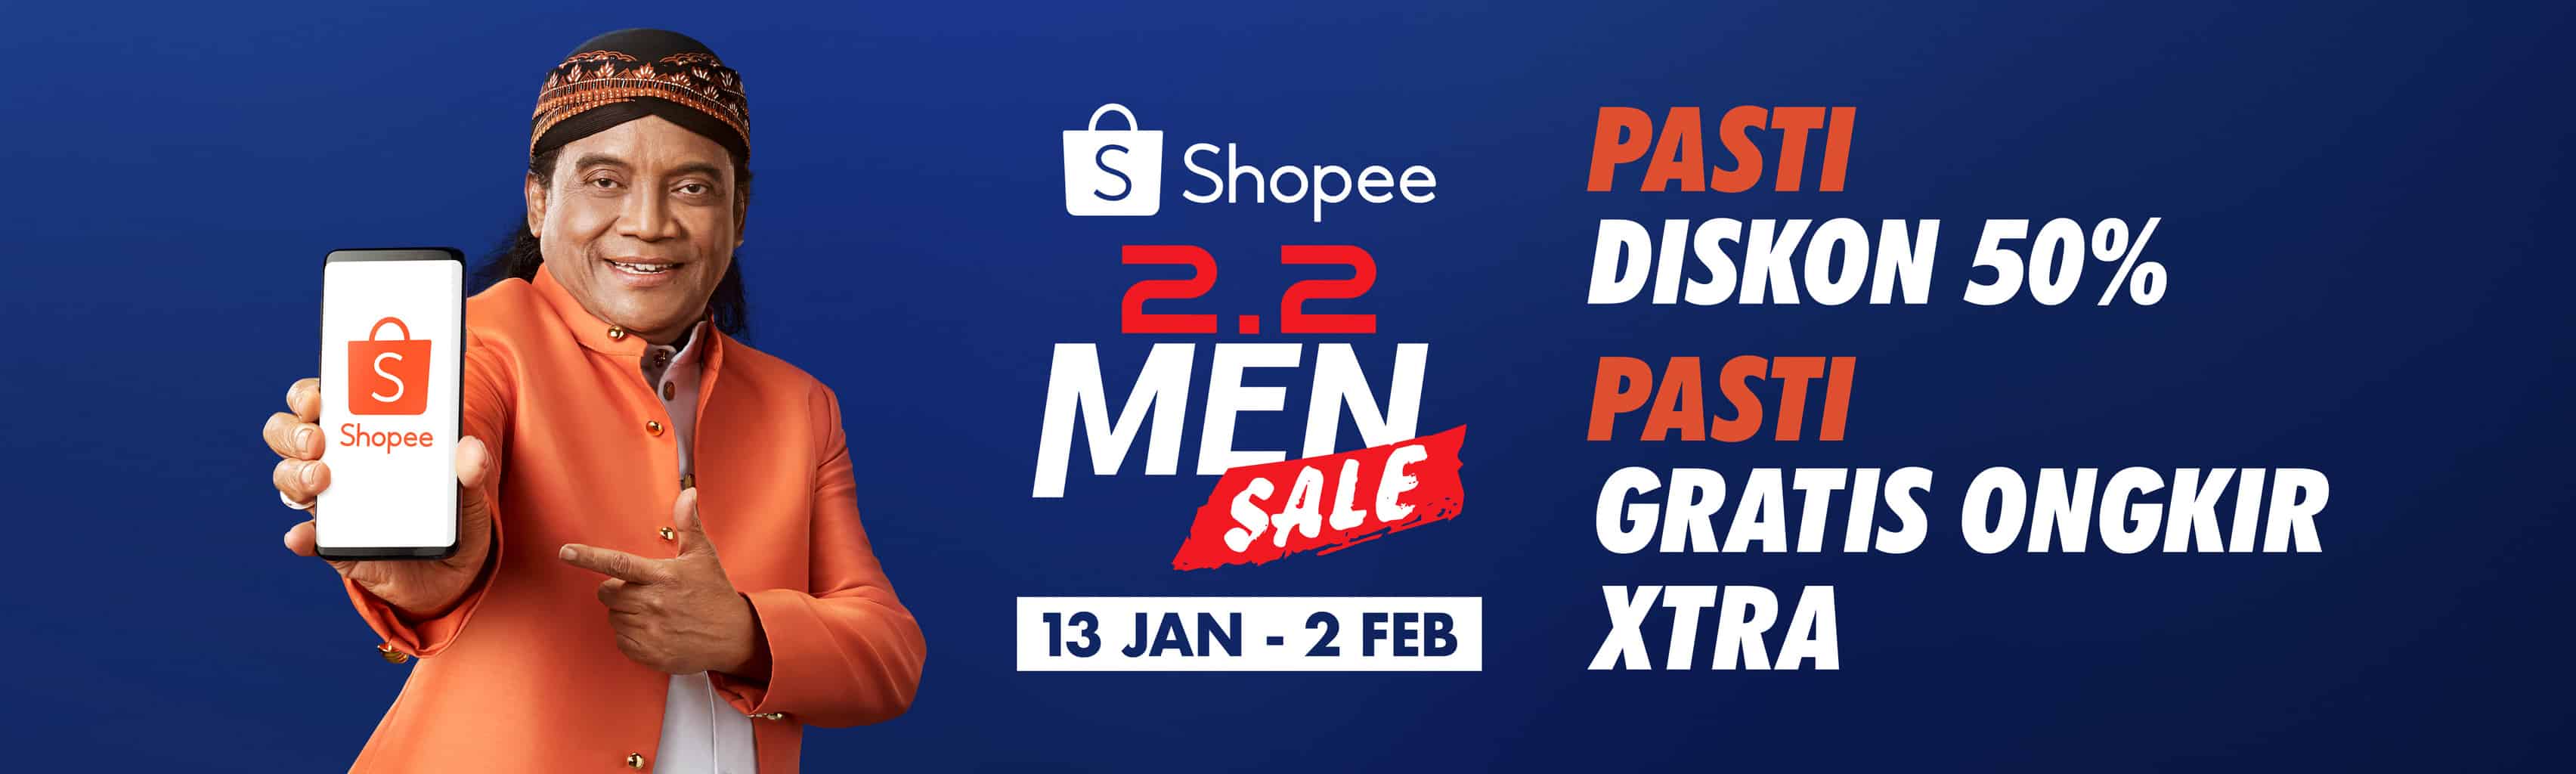 Shopee 2.2 Men Sale